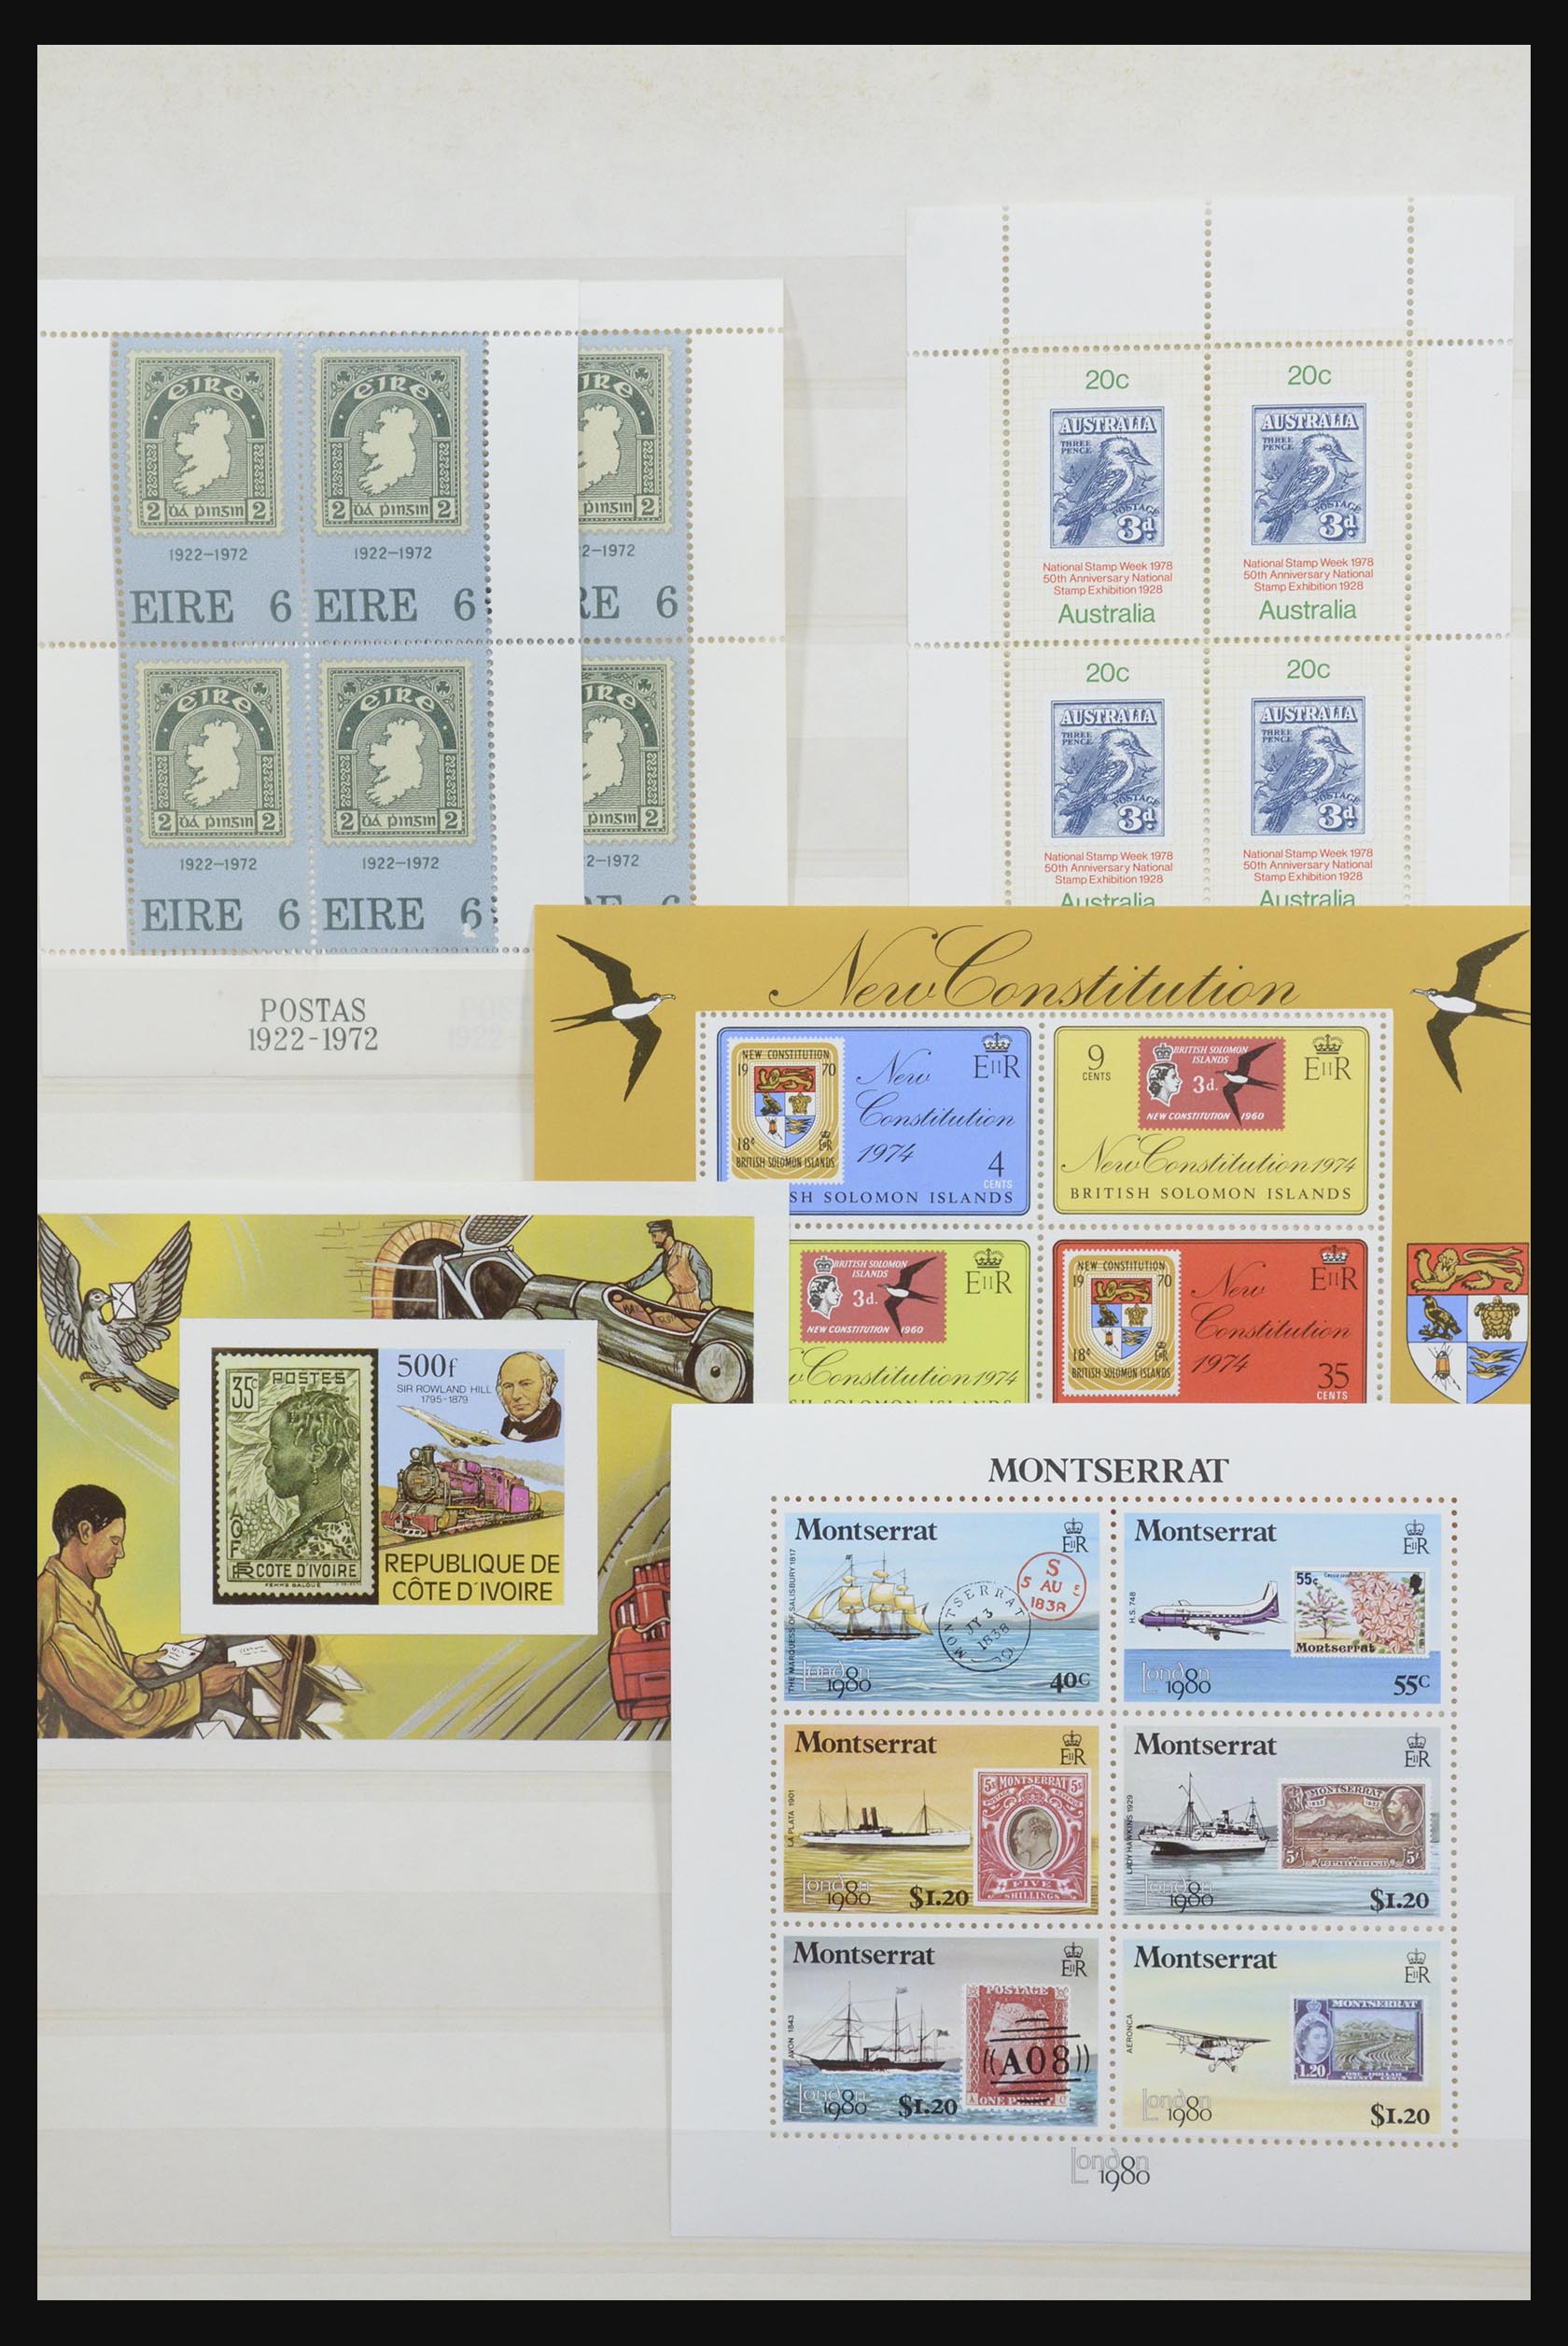 31652 012 - 31652 Motief: postzegel op postzegel 1940-1993.